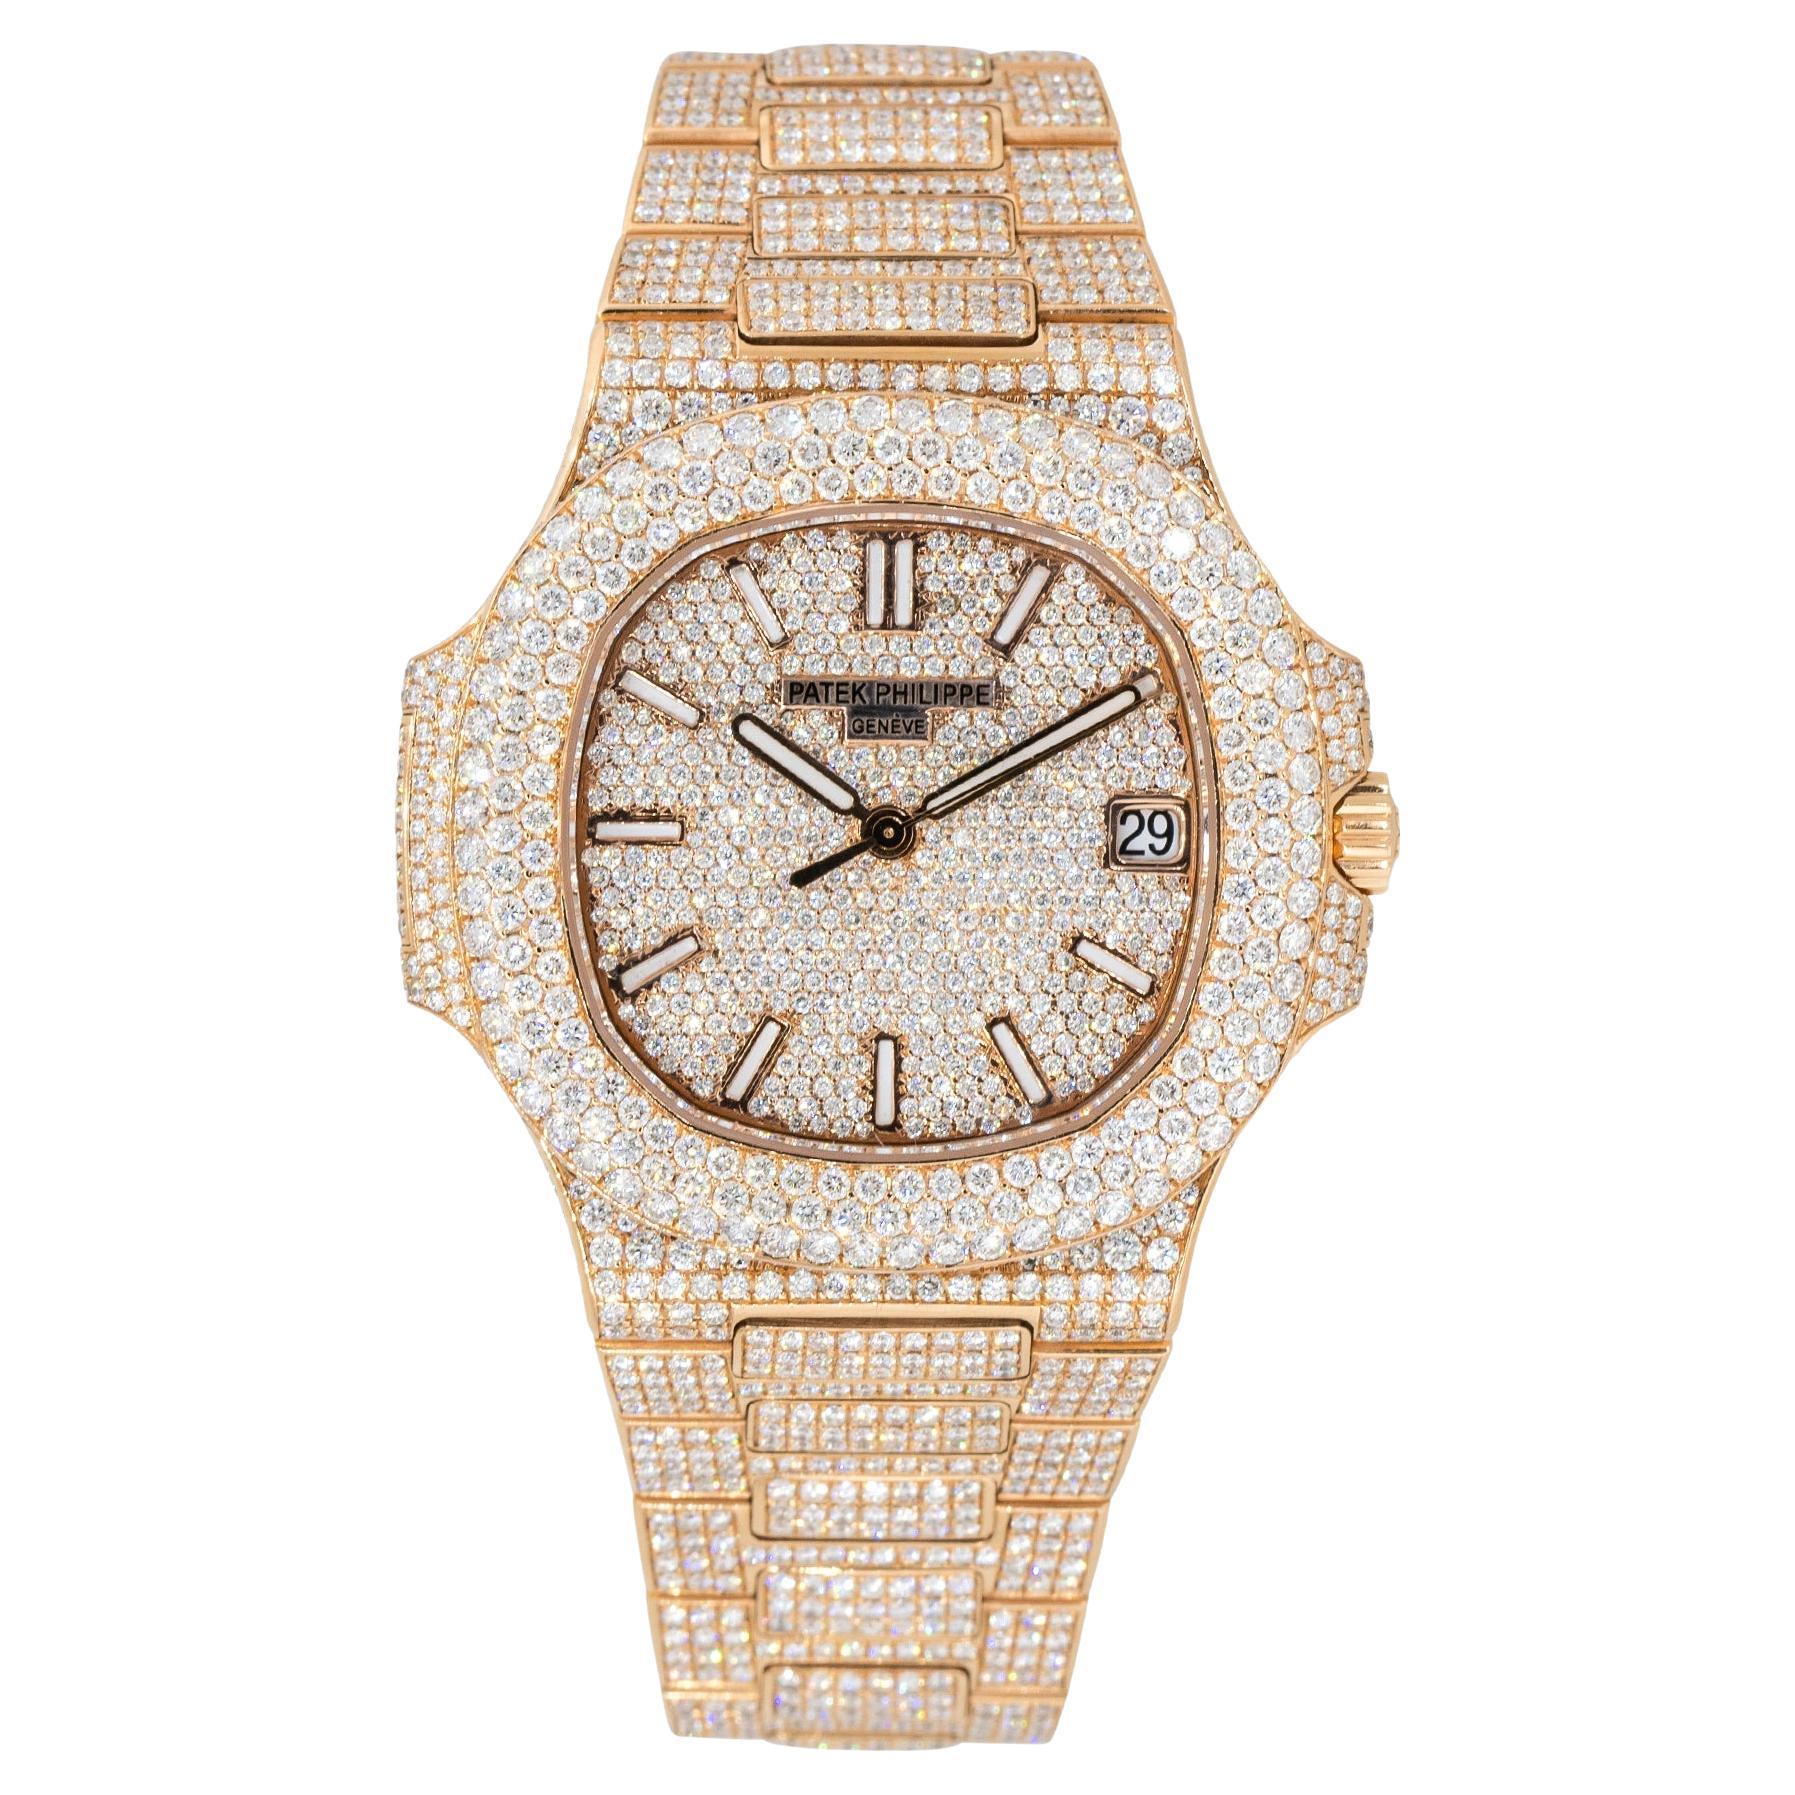 Patek Philippe 5711 Nautilus 18 Karat Rose Gold All Diamond Watch